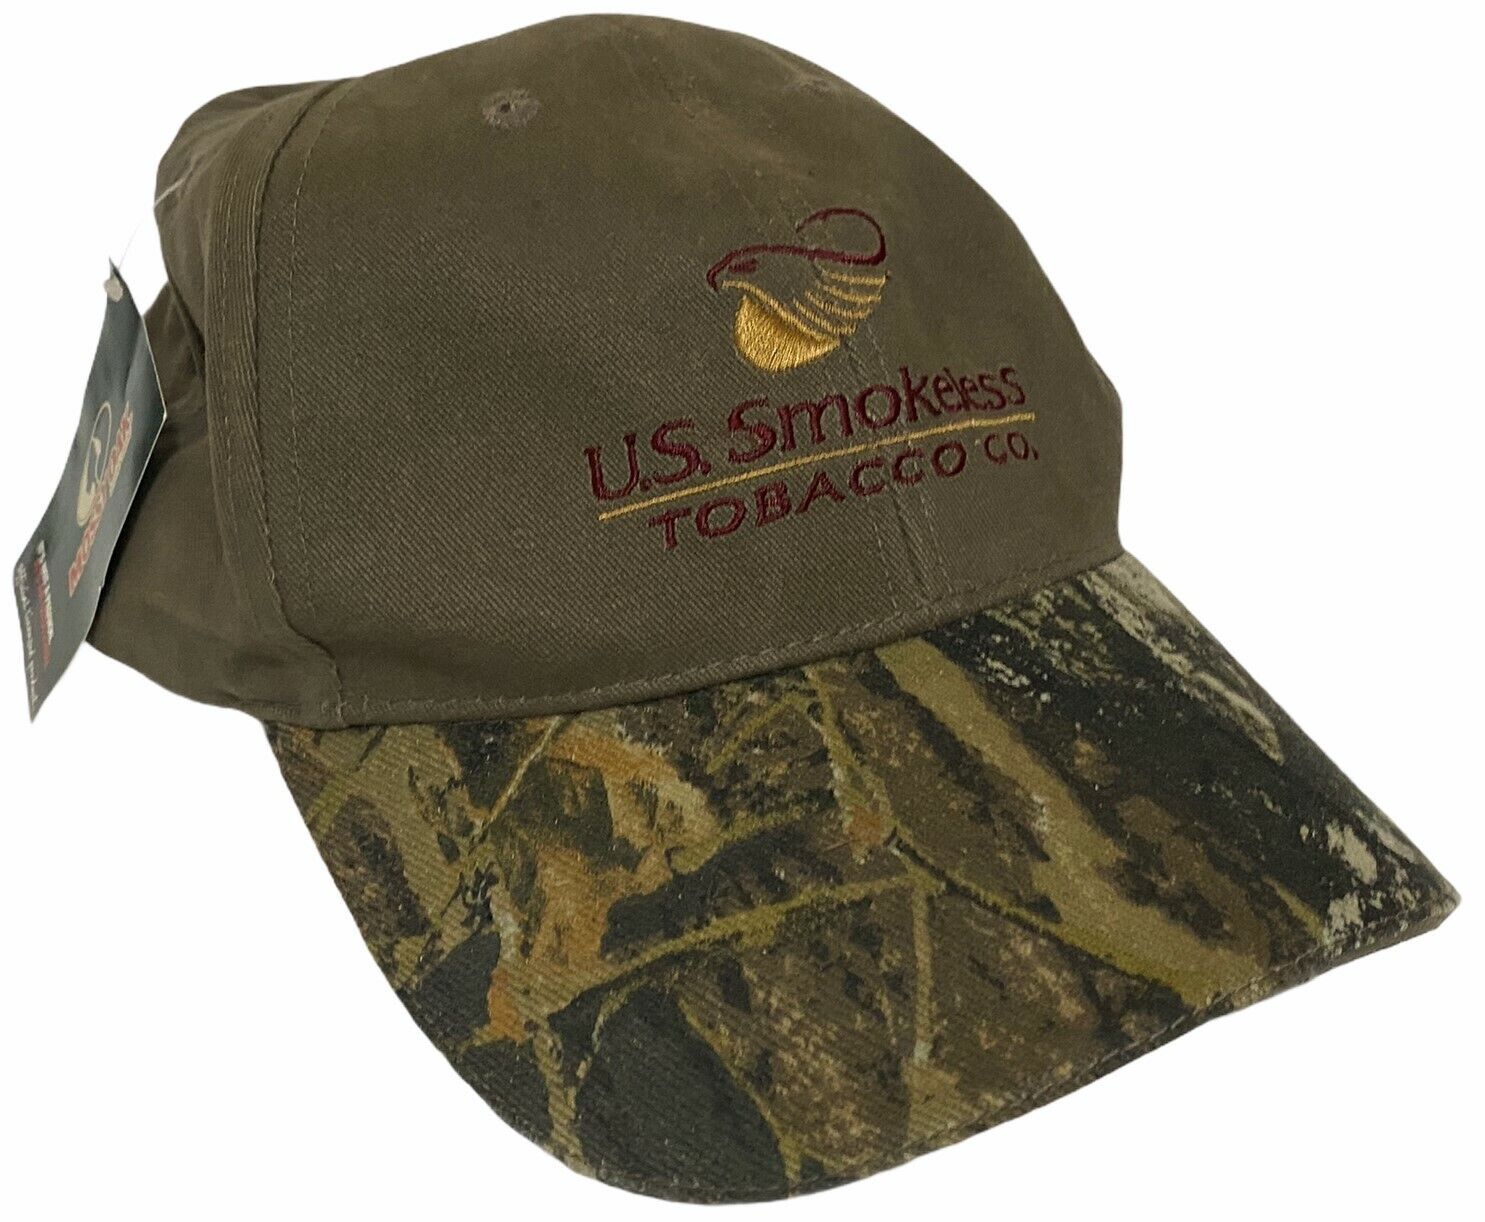 U.S. Smokeless Tobacco Company Mossy Oak Camo Baseball Adjustable Hat